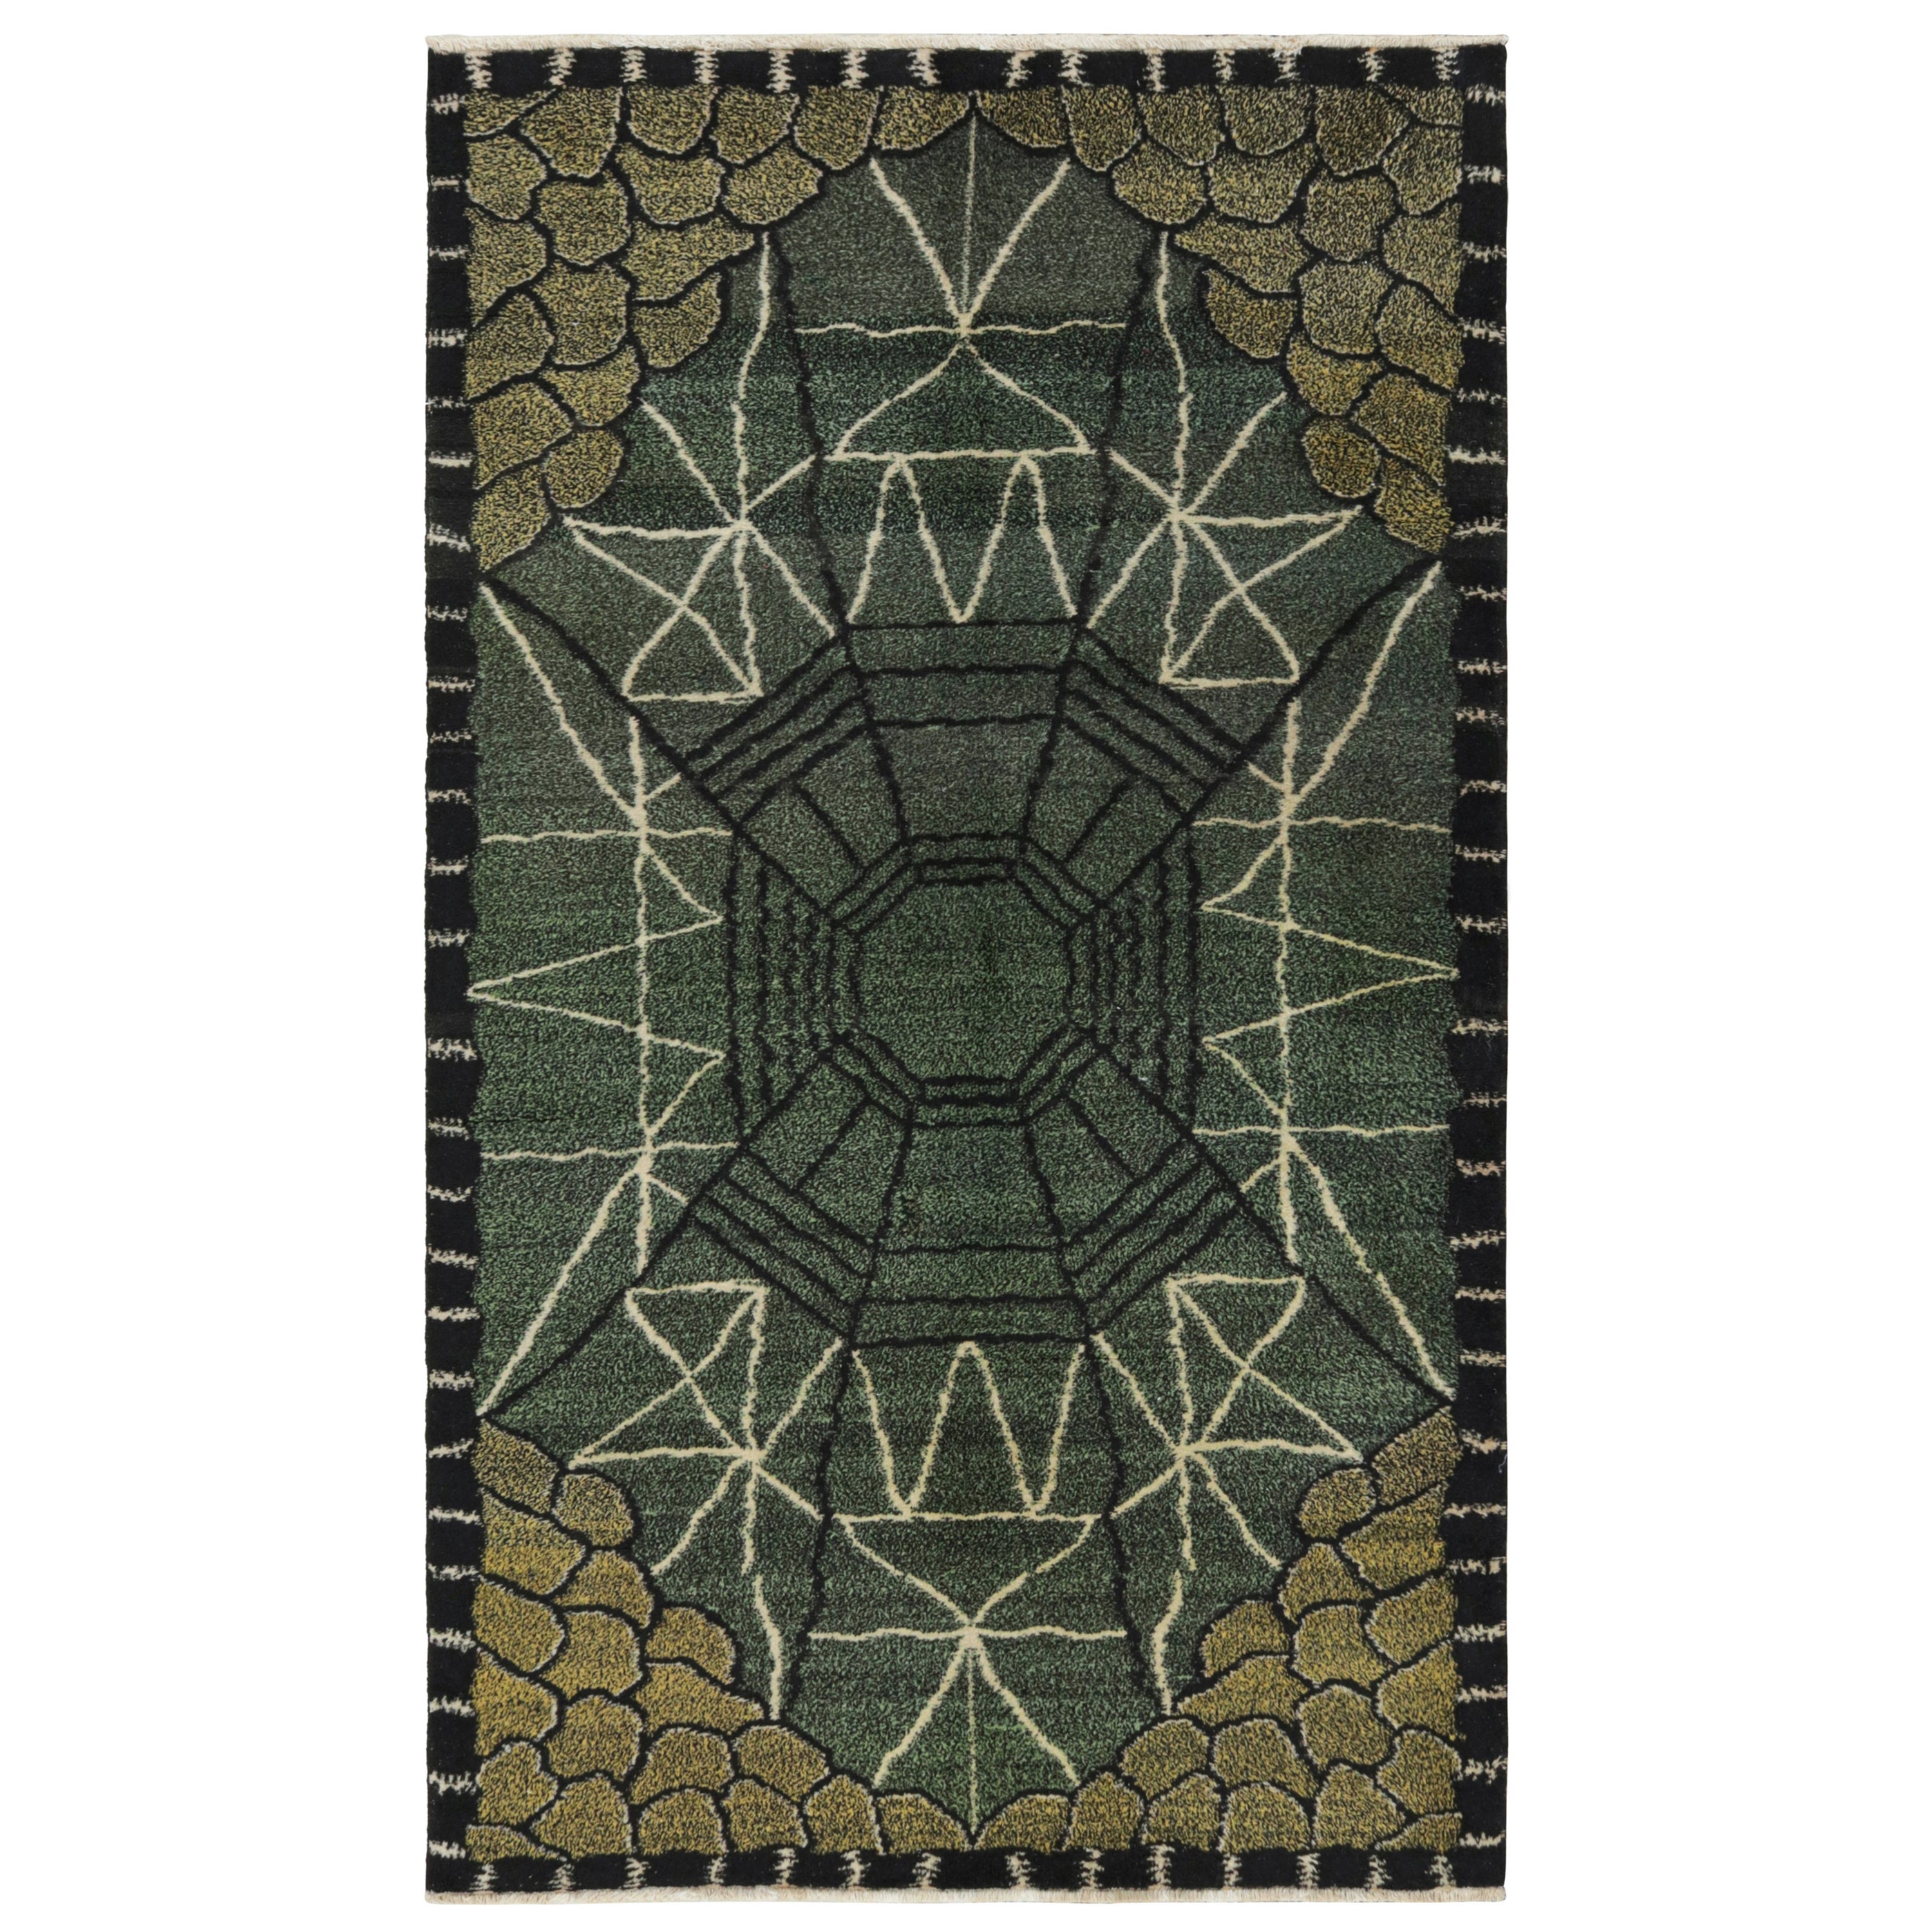 Vintage Zeki Müren Art Deco Rug, with bold Geometric patterns, from Rug & Kilim. For Sale